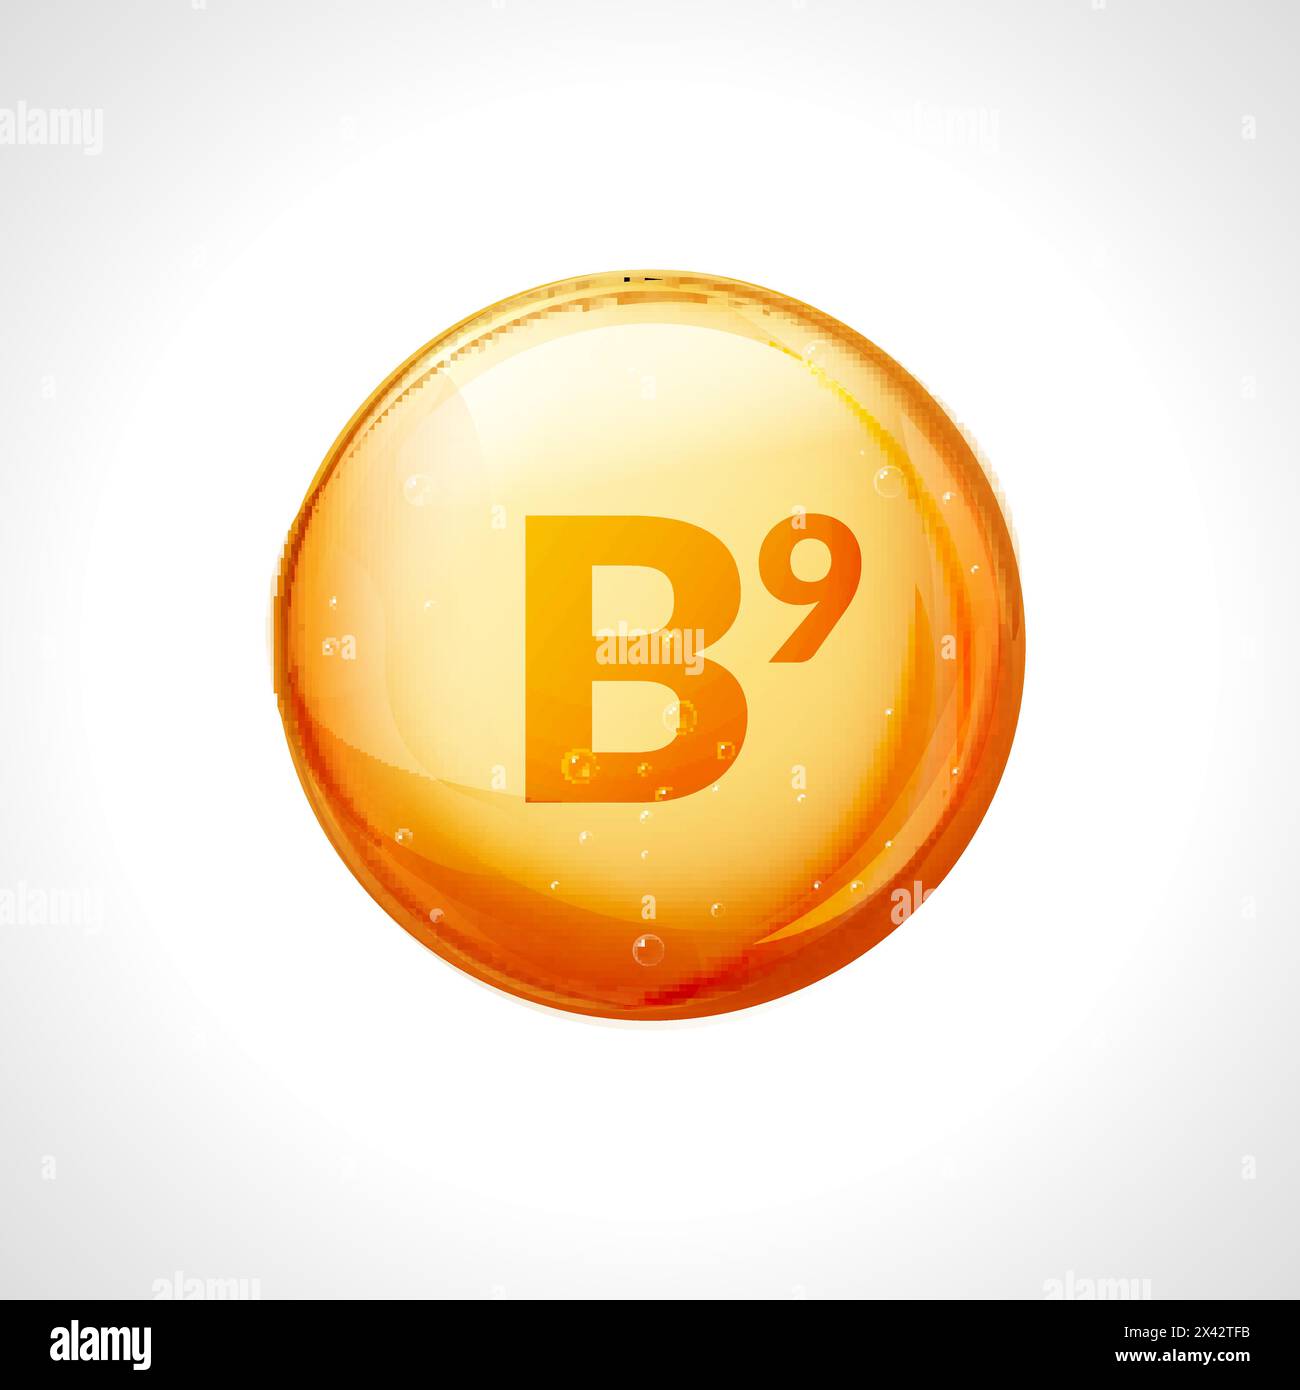 Vitamin B9 gold icon. Folic acid treatment skin care. Healthy pill natural medicine vitamin nutrition. Stock Vector